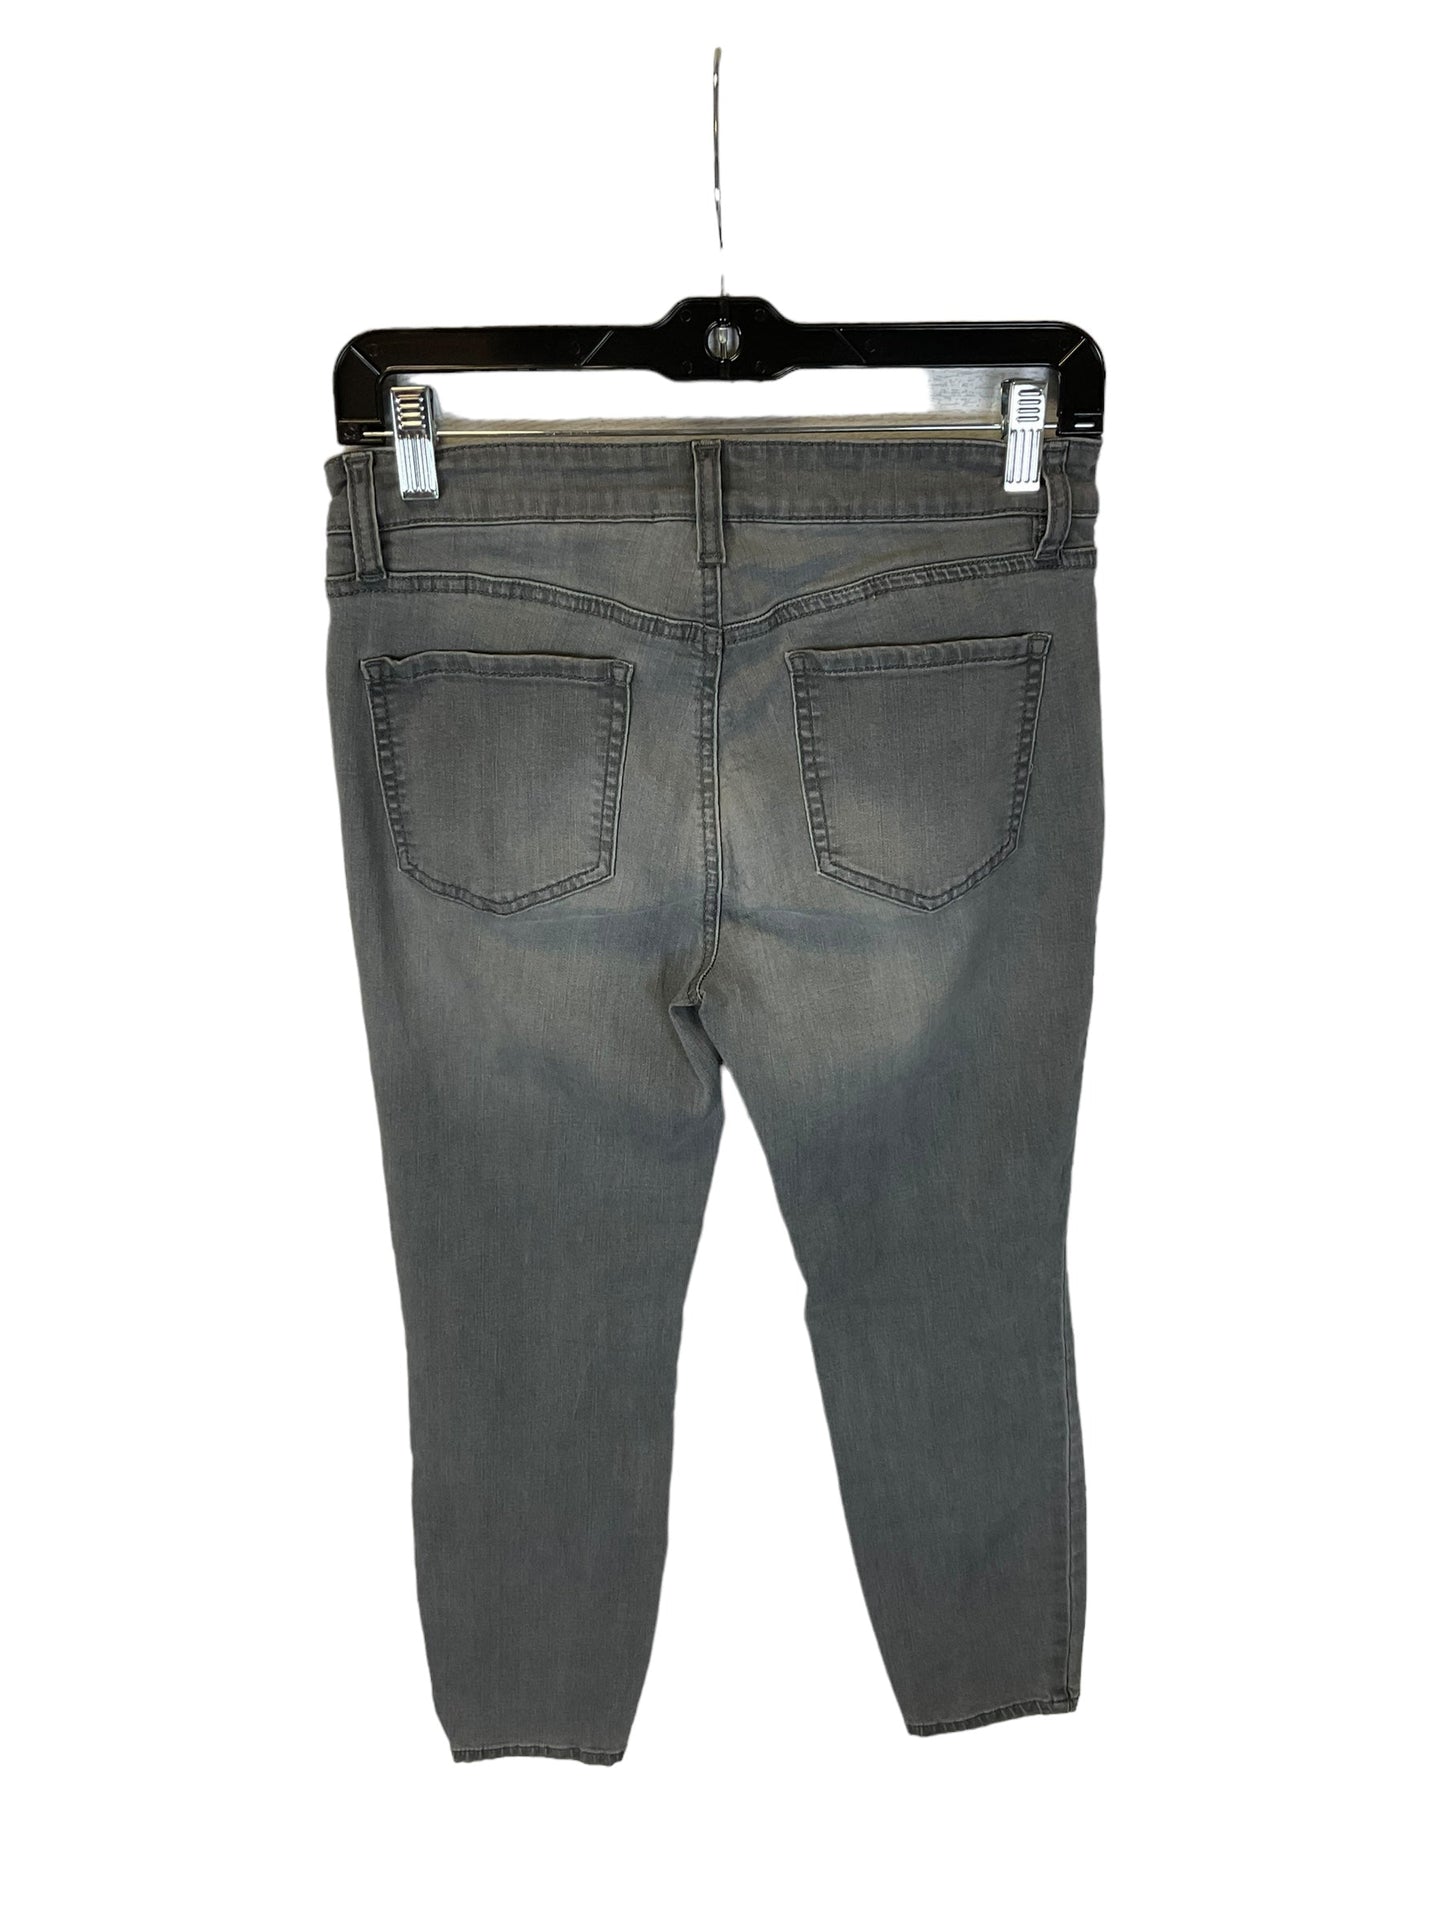 Jeans Designer By Buffalo David Bitton  Size: 4